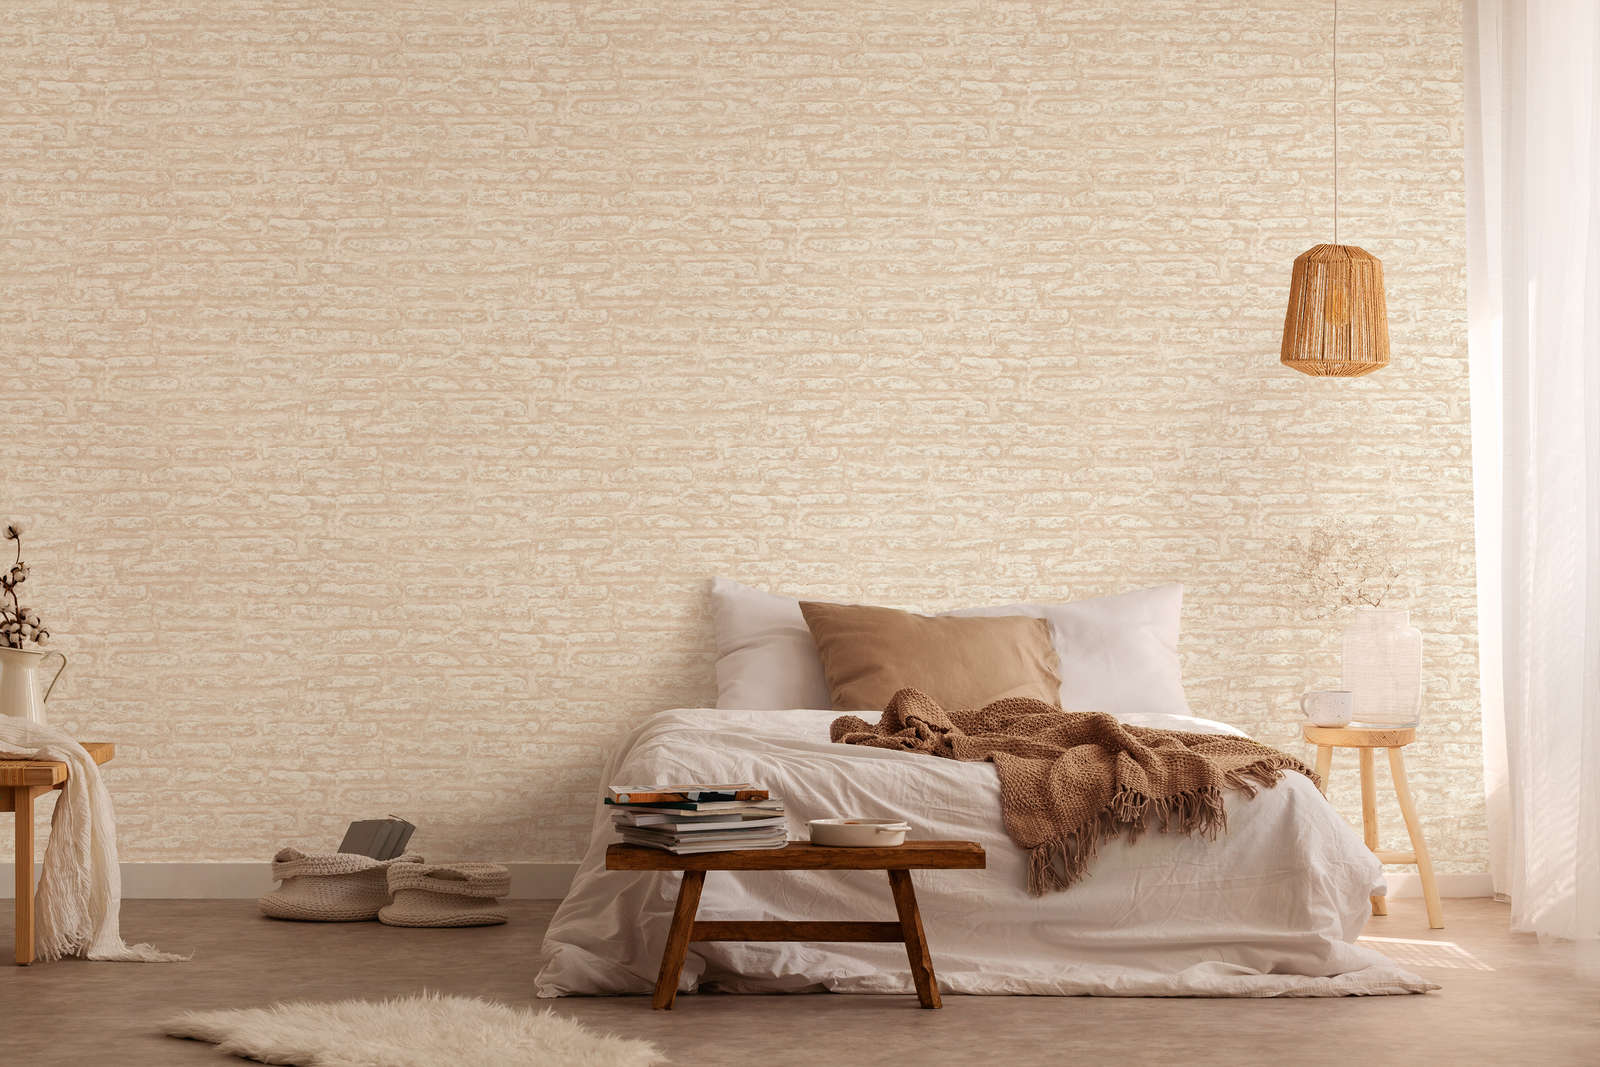             Non-woven wallpaper with abstract plaster pattern matt - beige, white
        